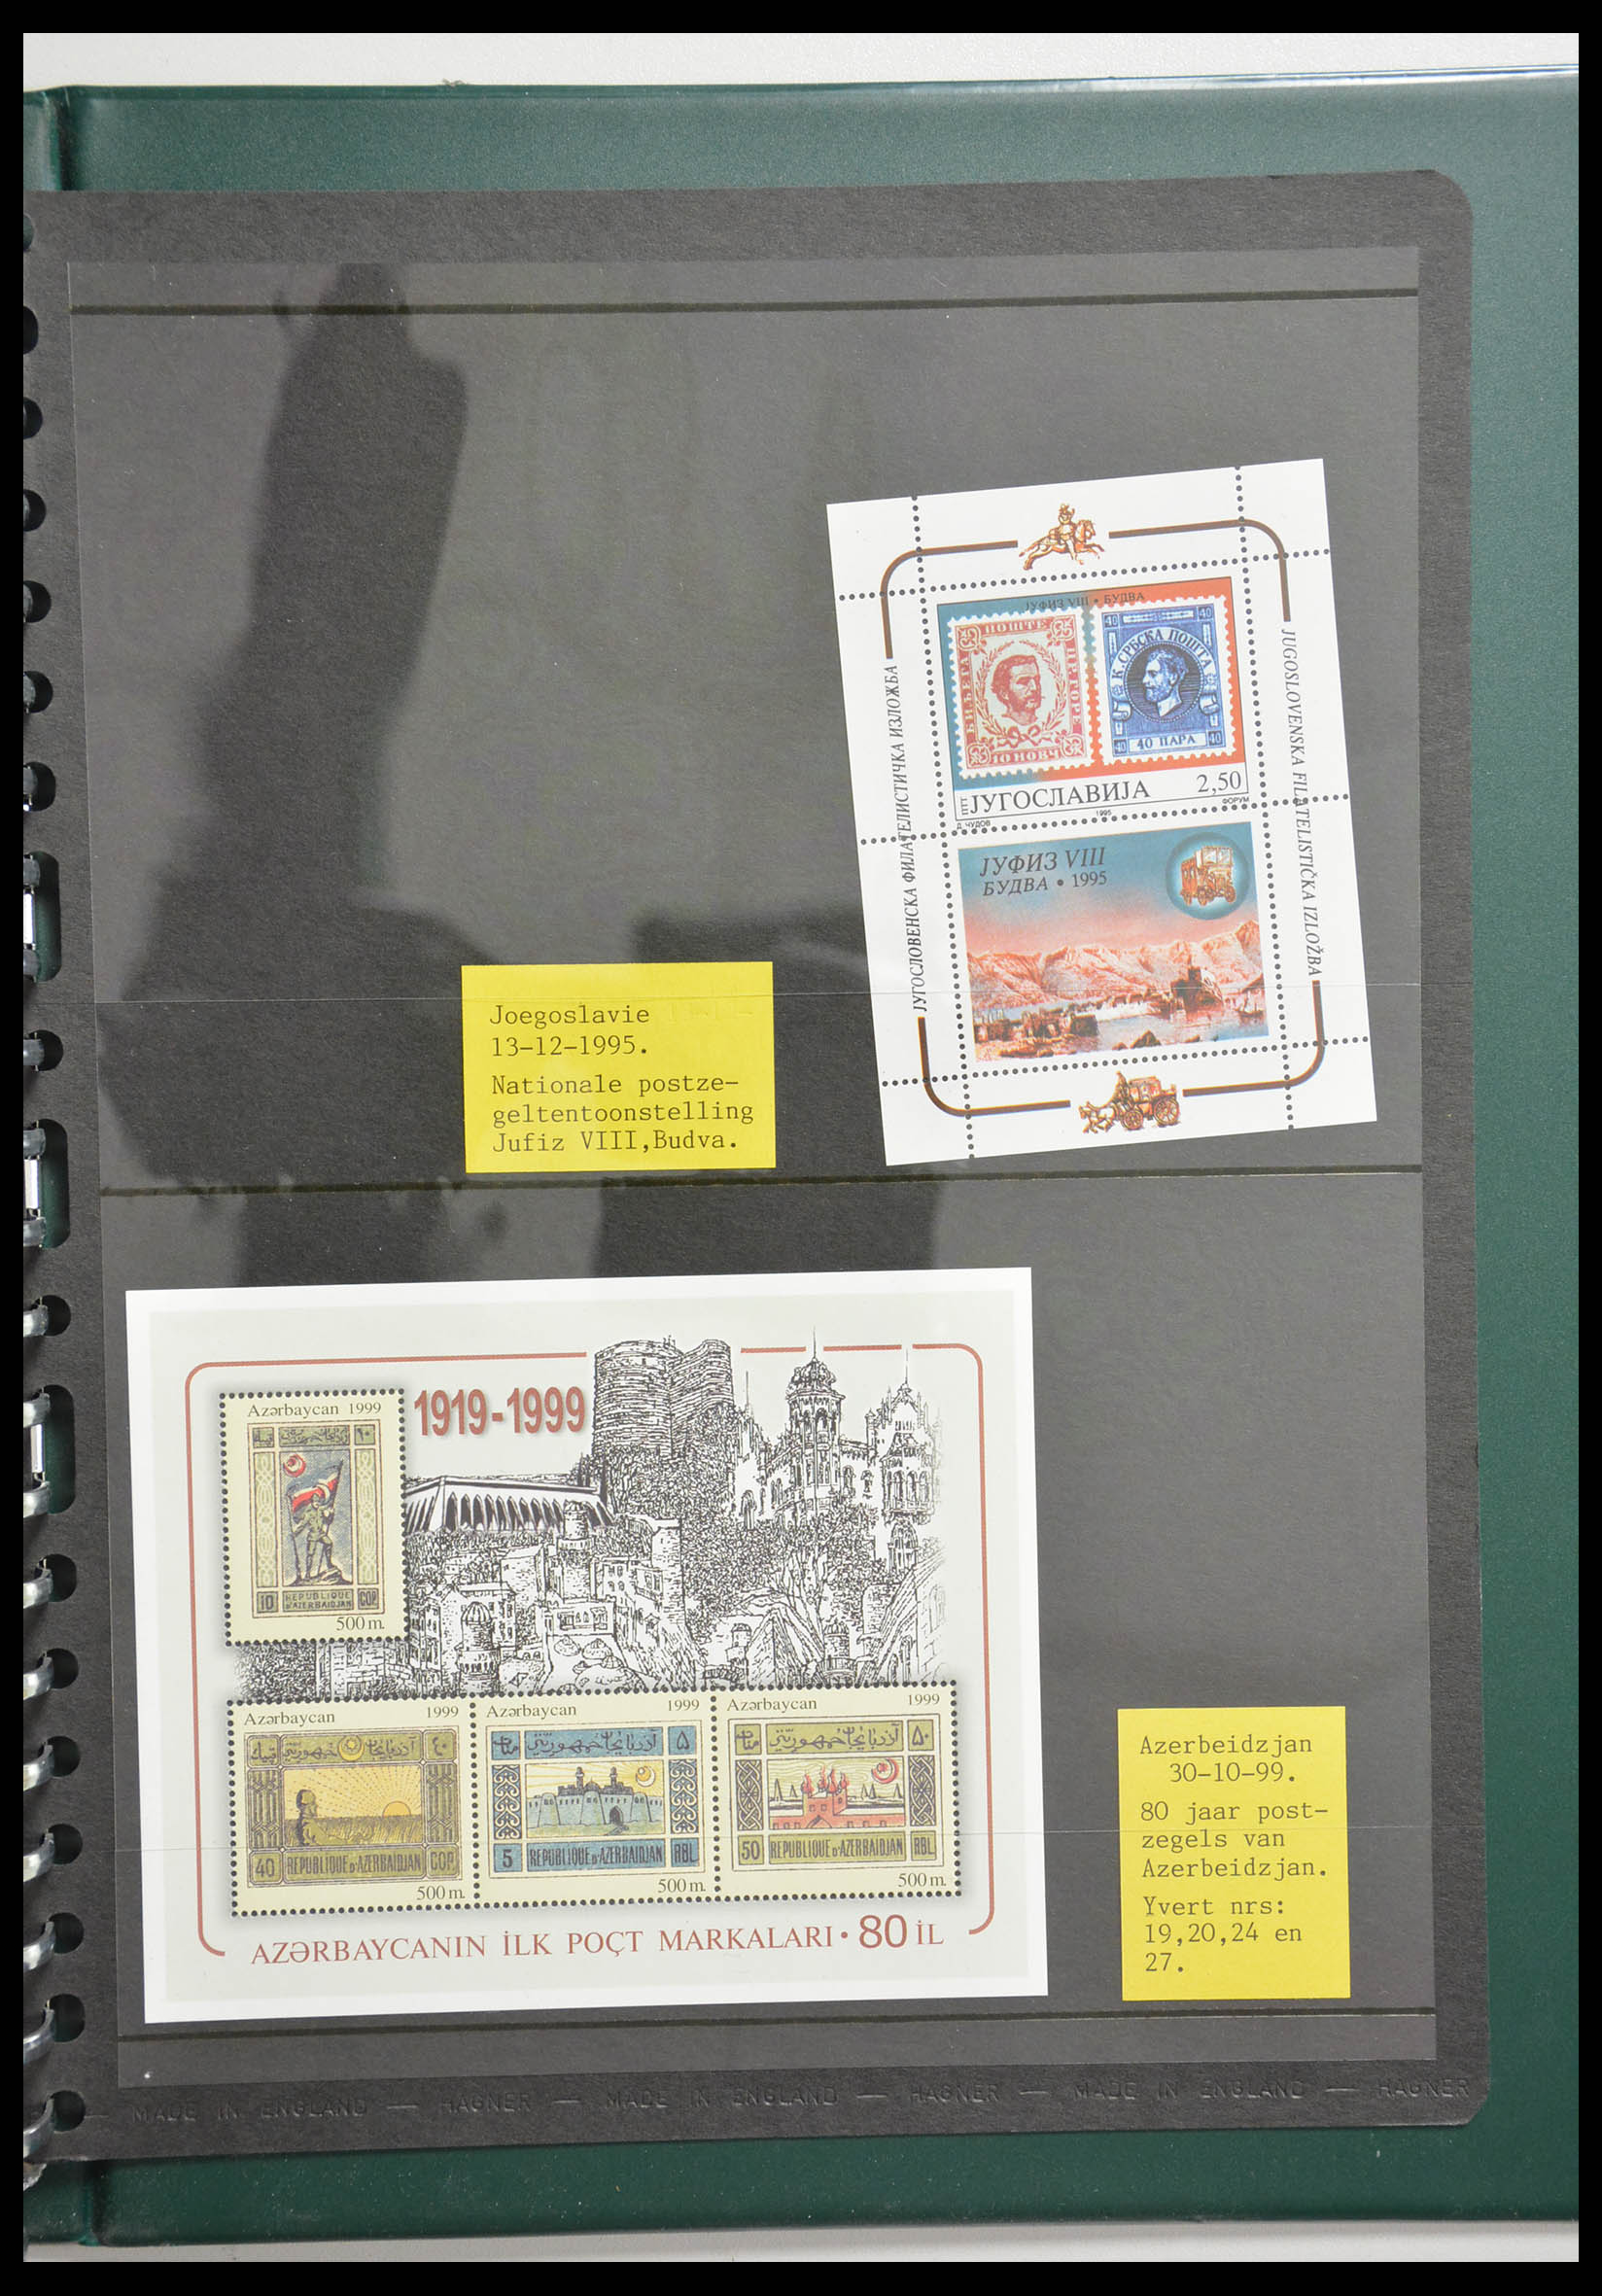 28337 137 - 28337 Postzegel op postzegel 1840-2001.